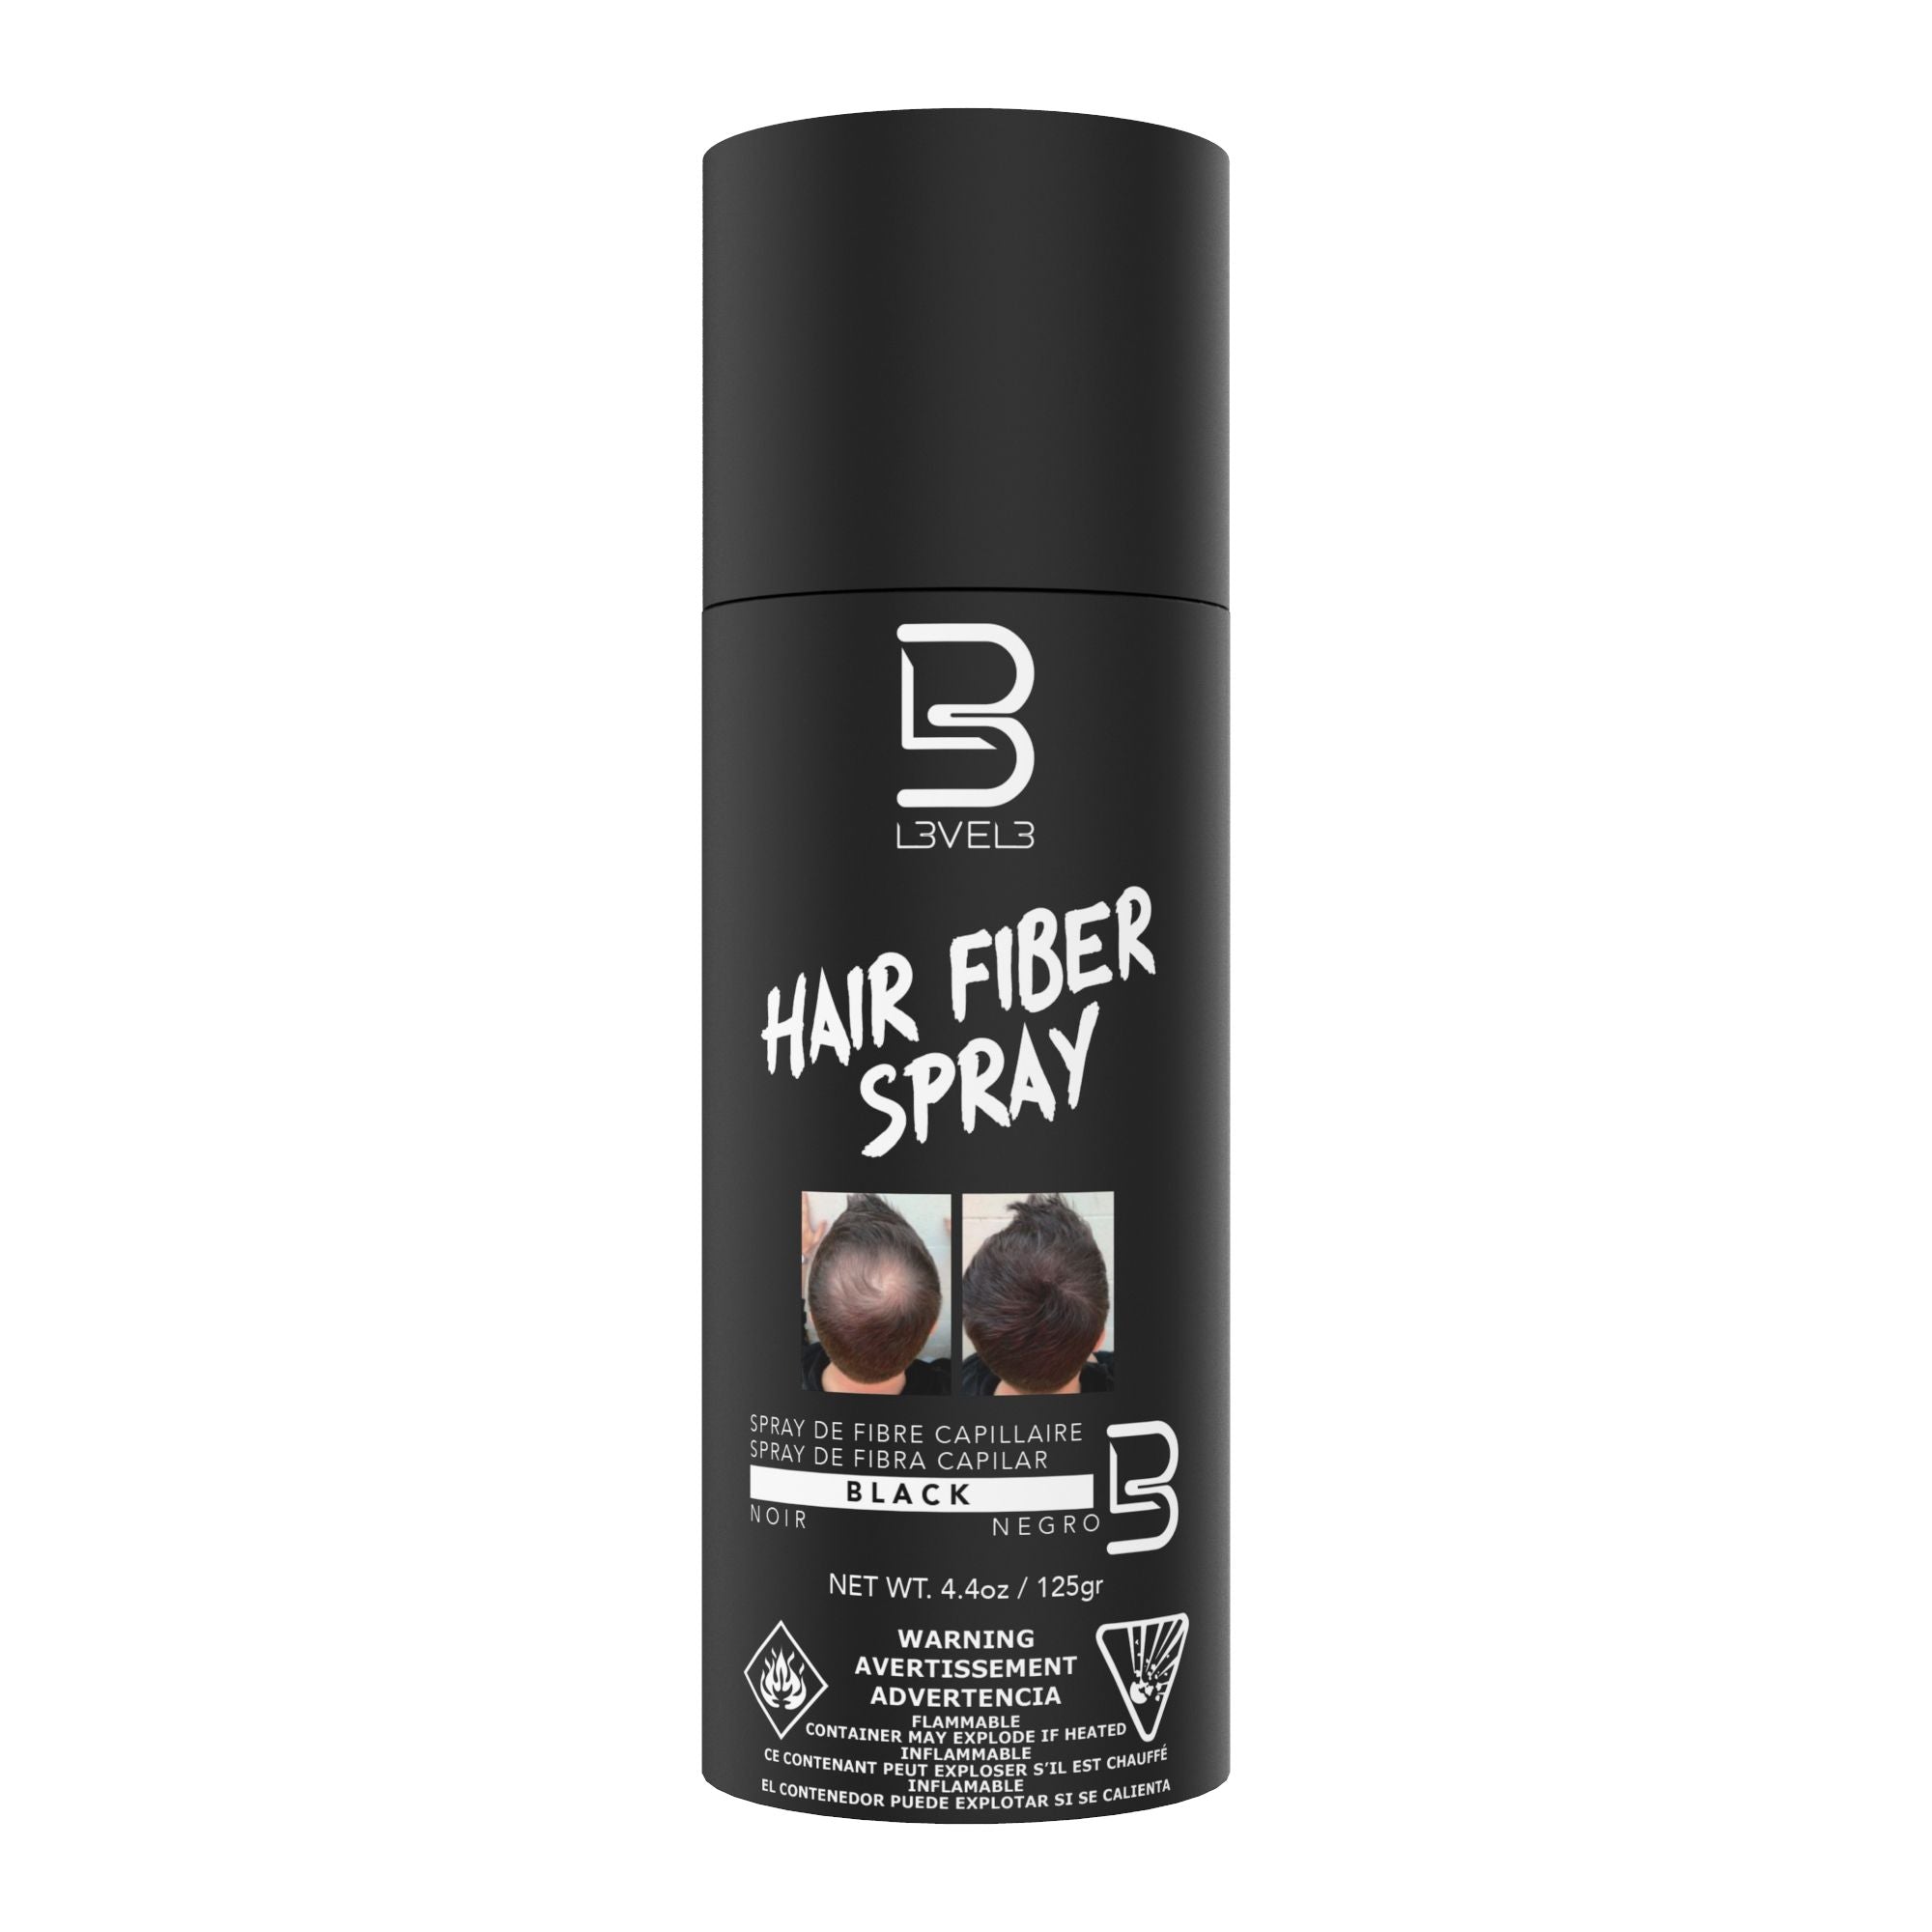 Hair Fiber Spray